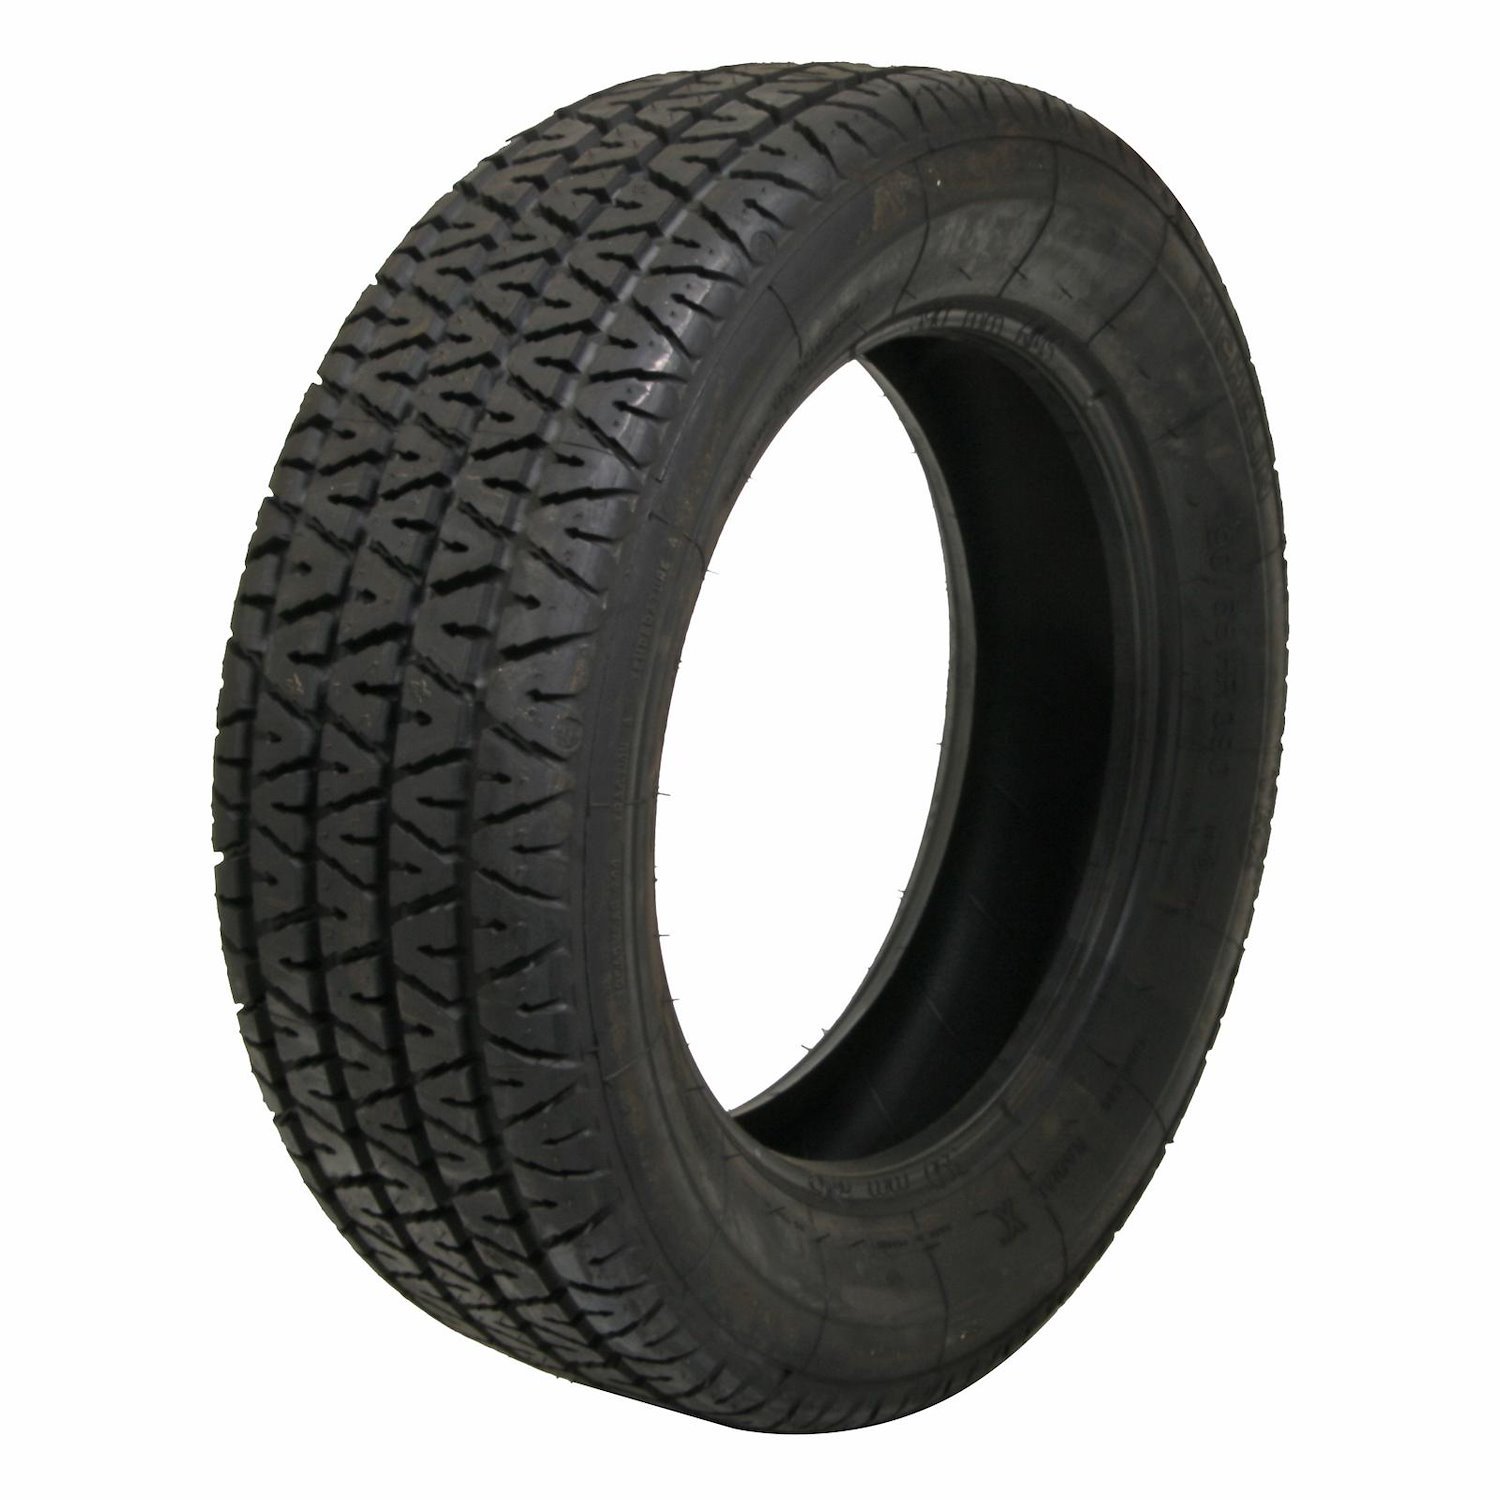 555691 Tire, Michelin TRX-B, 190/65HR390 89H